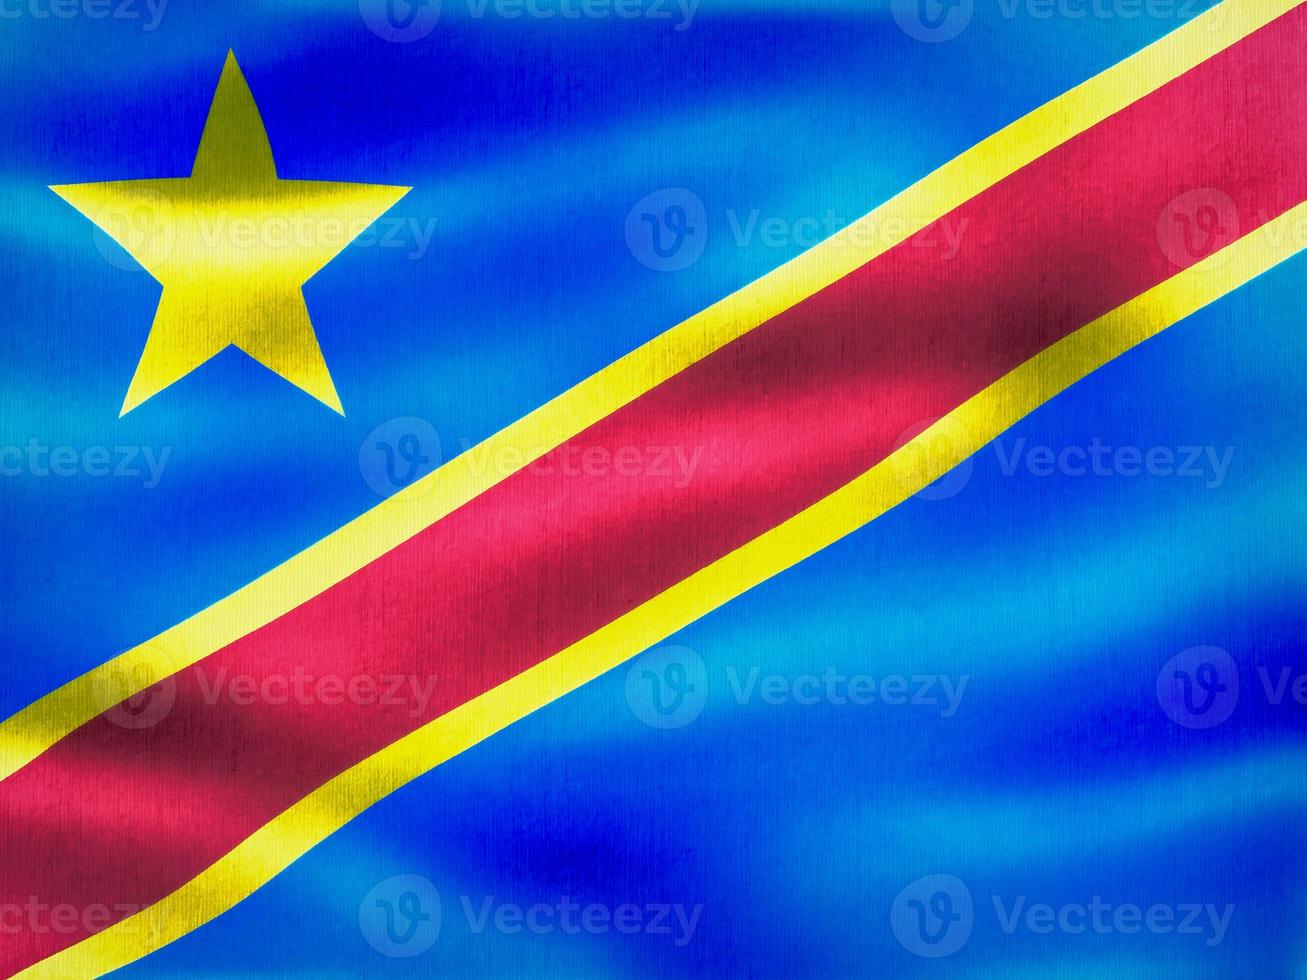 Democratic Republic of the Congo flag - realistic waving fabric flag photo